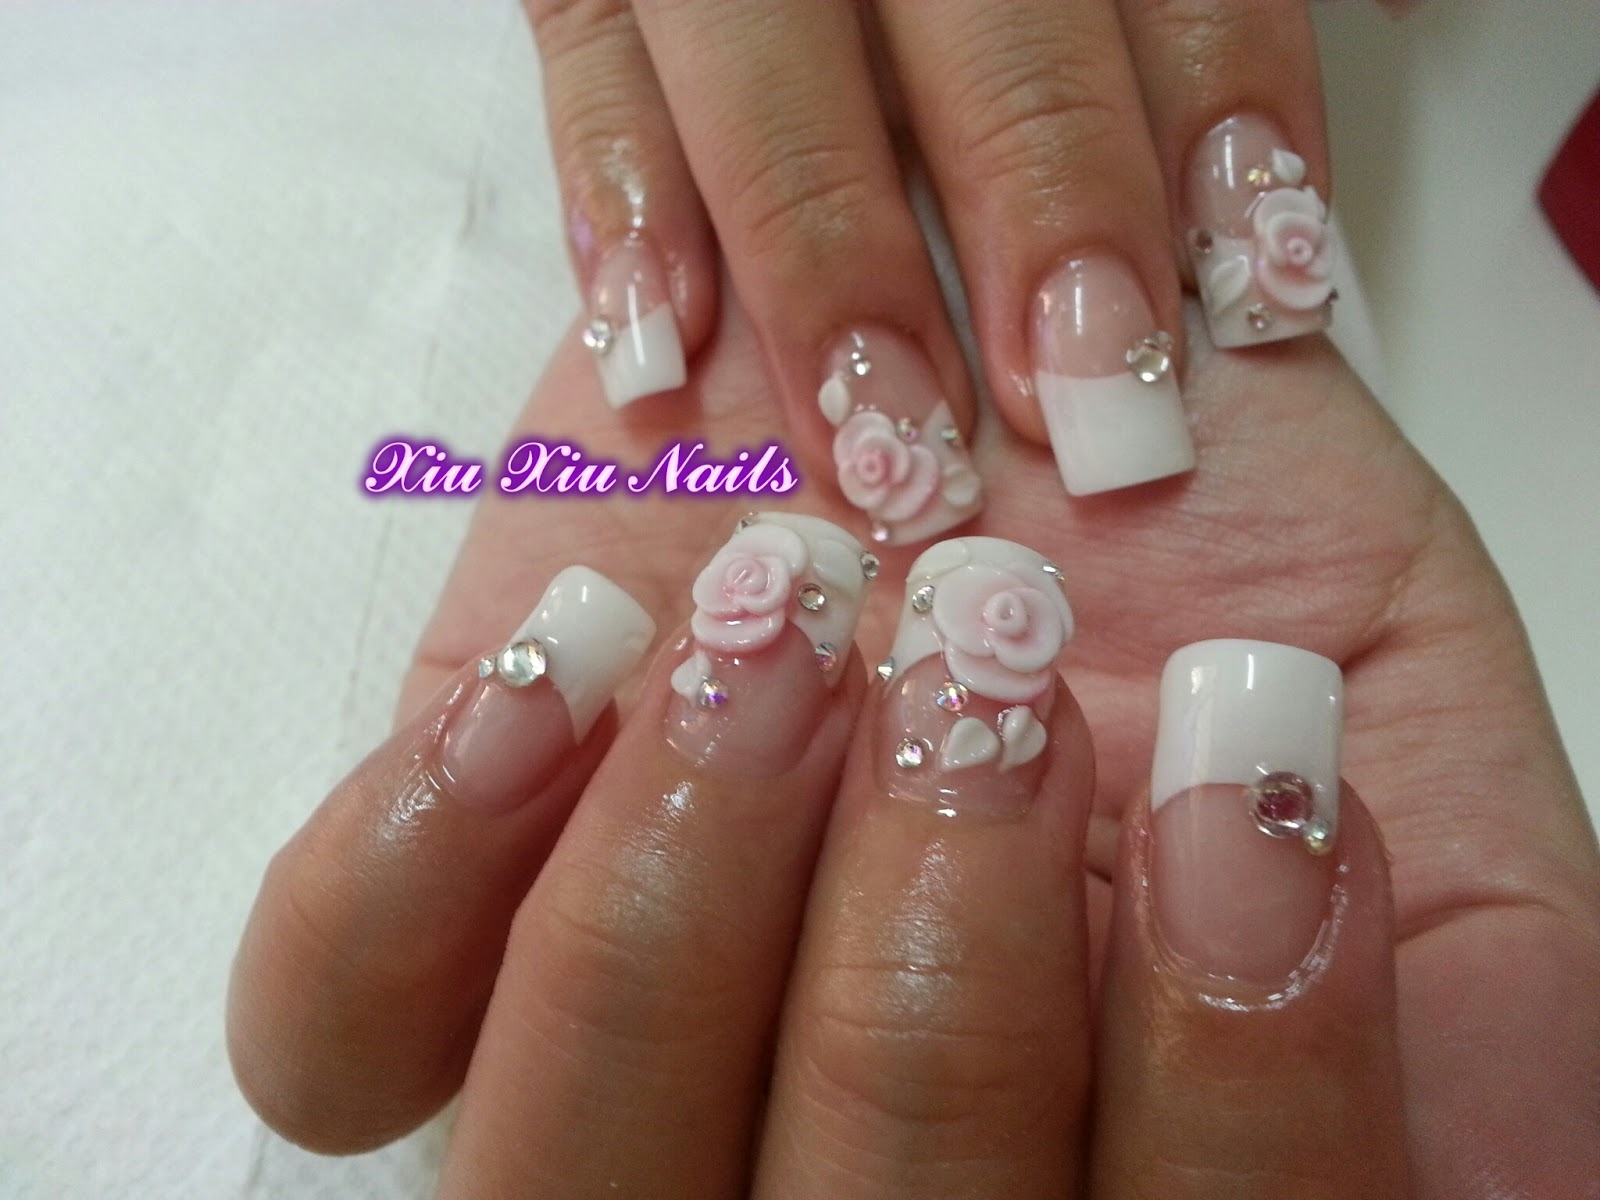 Xiu xiu nails: Bridal Nails